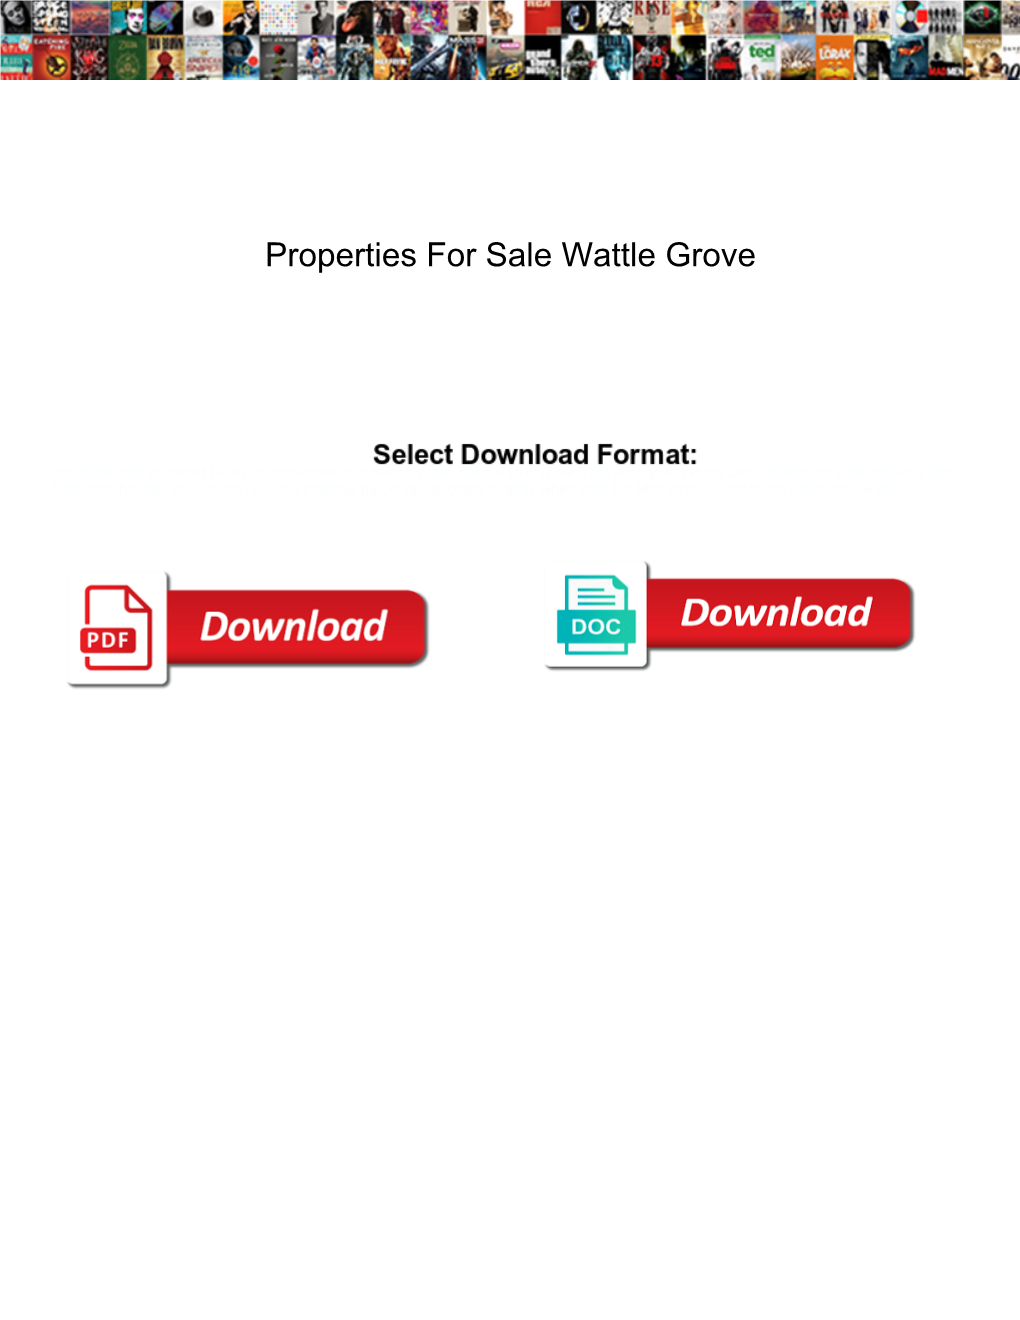 Properties for Sale Wattle Grove